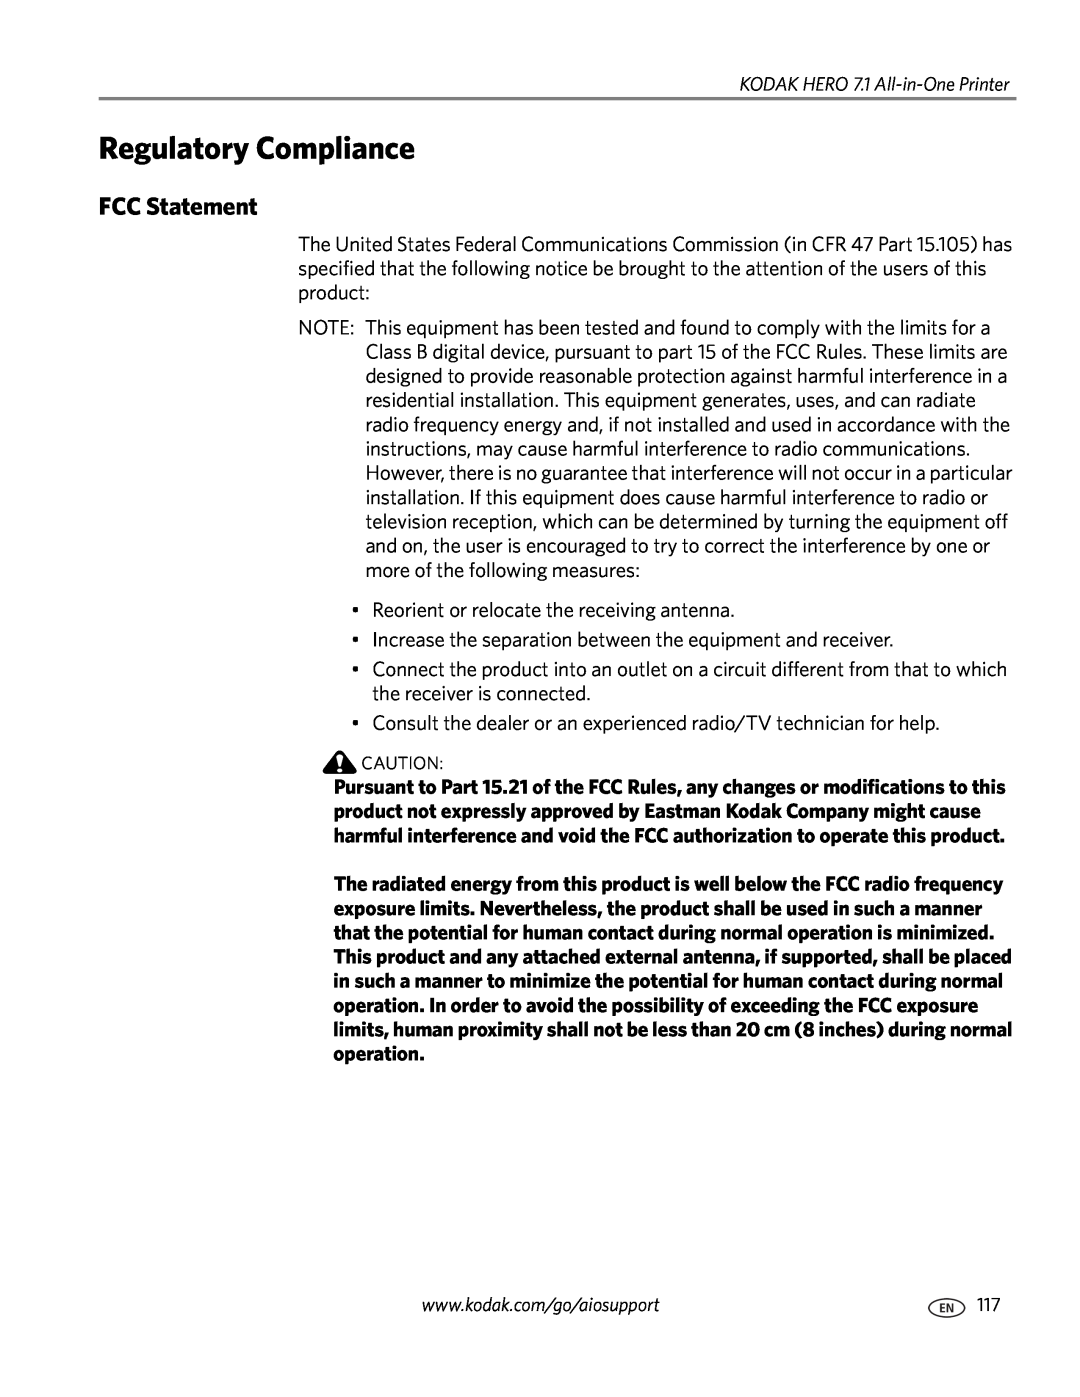 Kodak manual Regulatory Compliance, FCC Statement, KODAK HERO 7.1 All-in-One Printer 